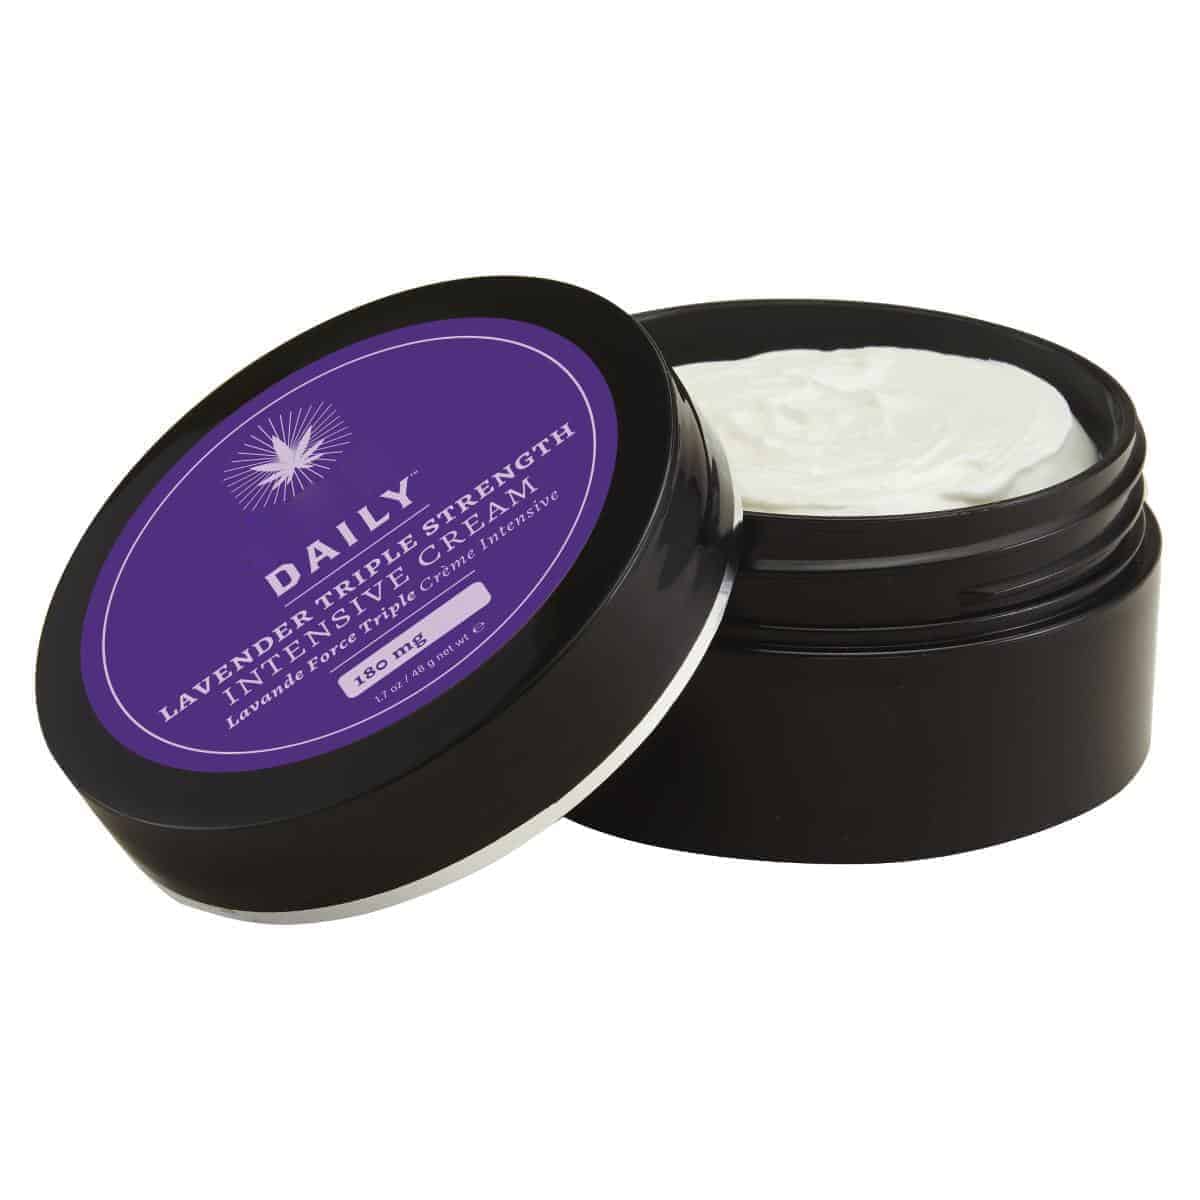 Daily Triple Strength Intensive Cream 1.7 oz Lavender